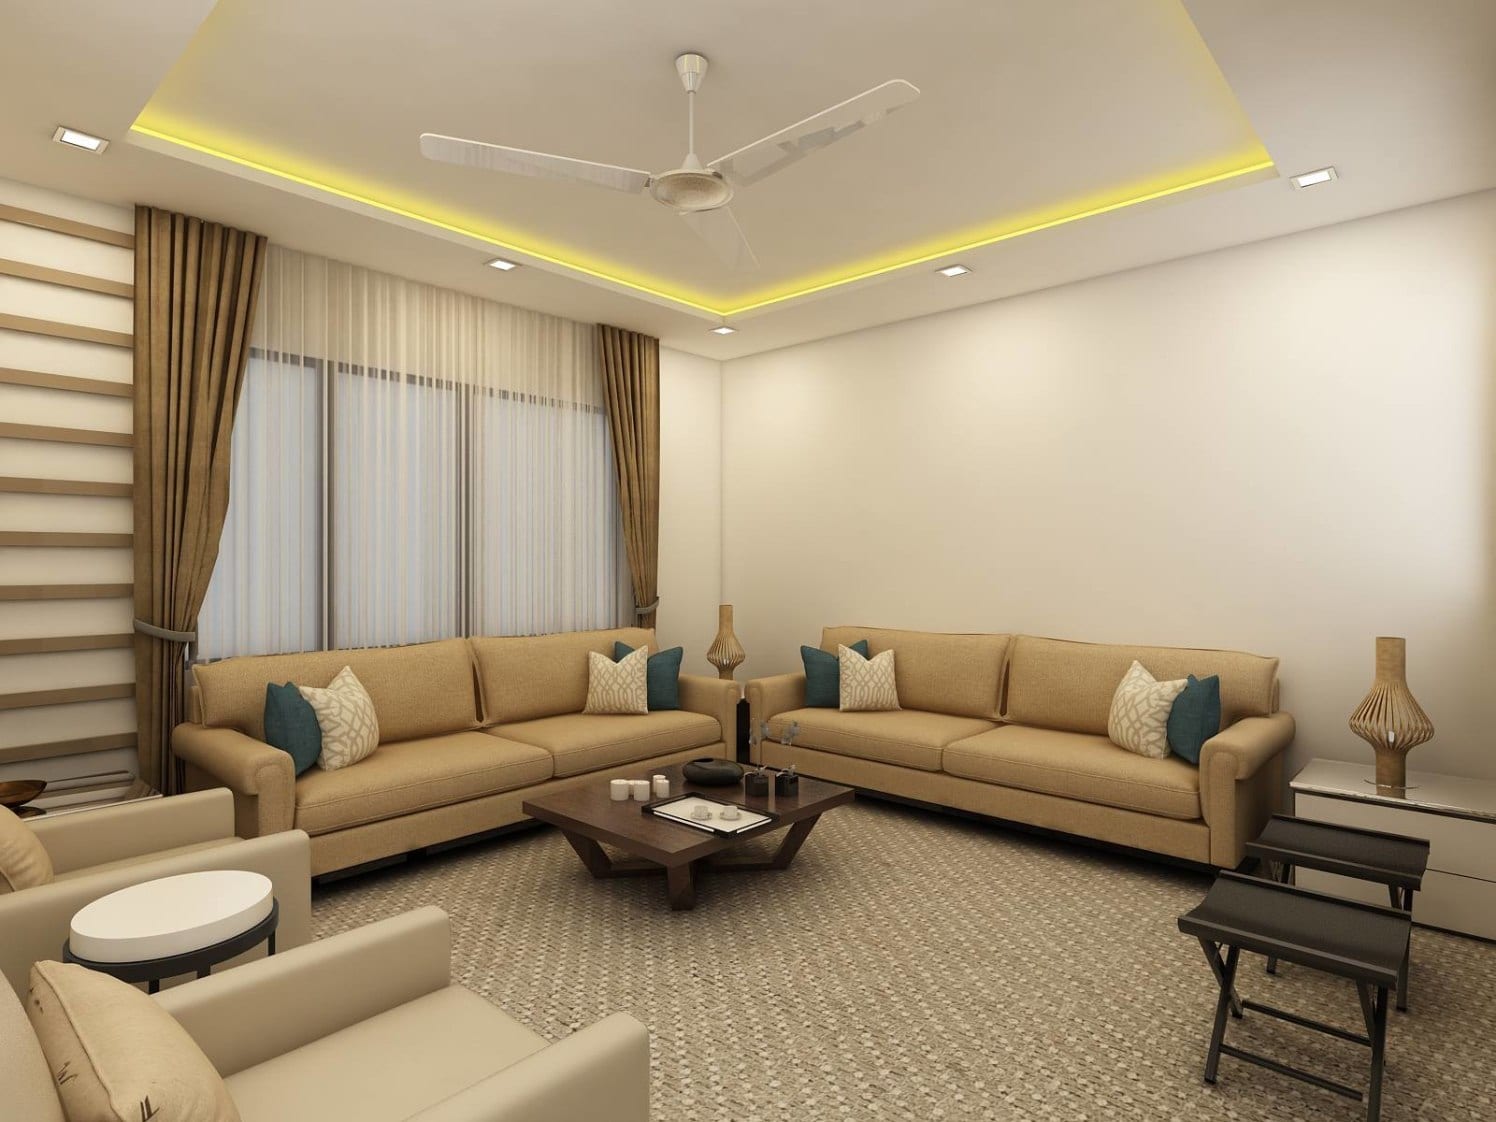 30 BEST Modern Gypsum Ceiling Designs for Living room ...